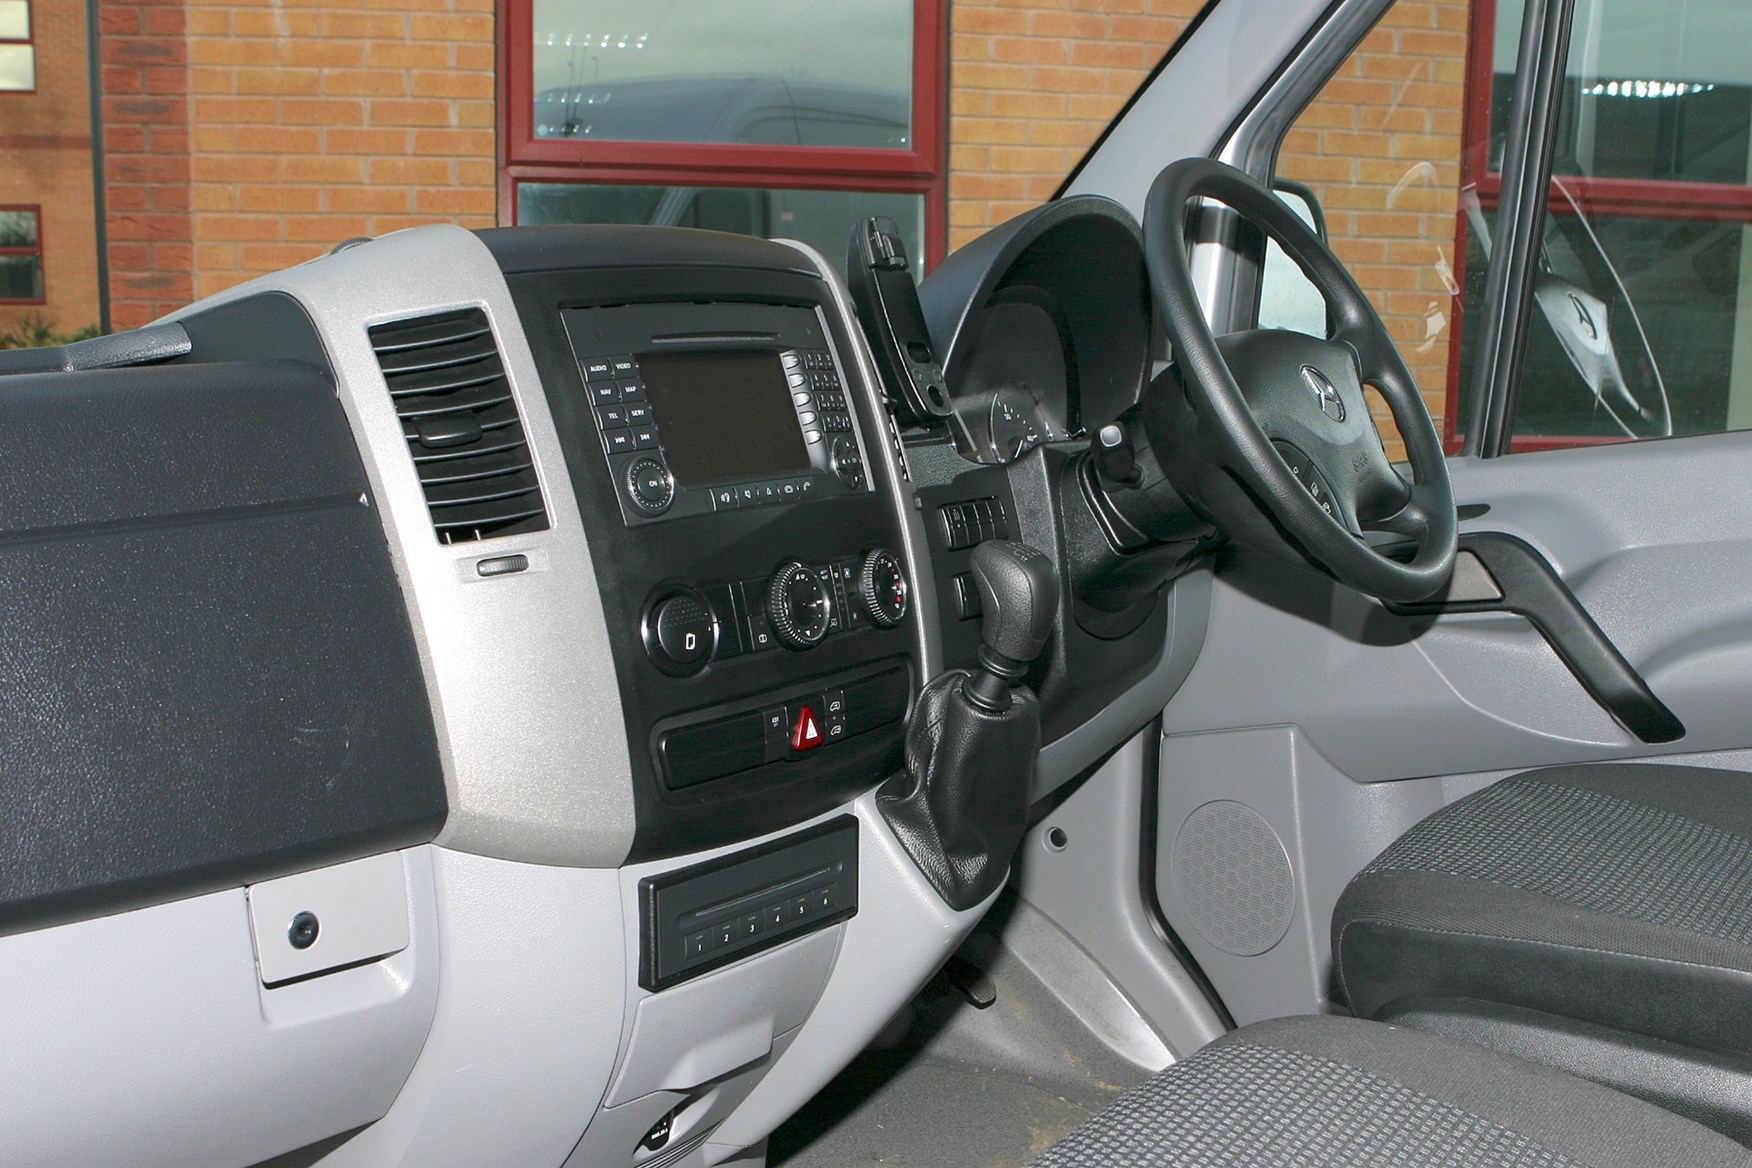 Mercedes-Benz Sprinter 2006-2013 review on Parkers Vans - cabin, interior